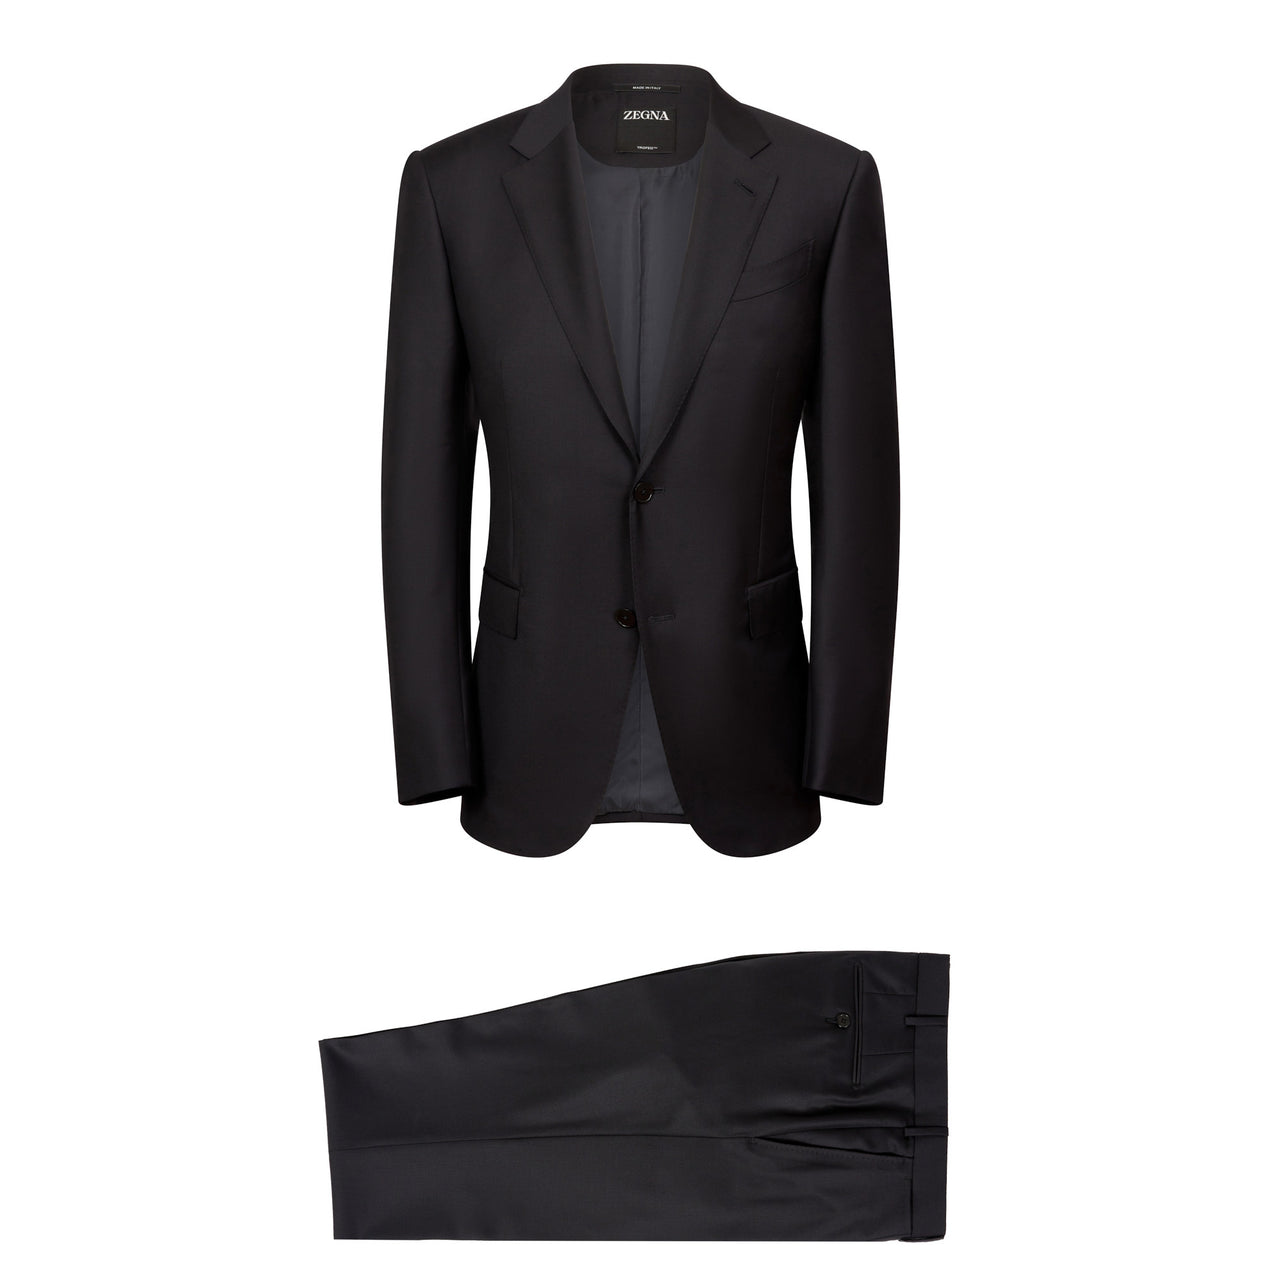 ZEGNA Trofeo™ Plain Wool Suit BLACK REG